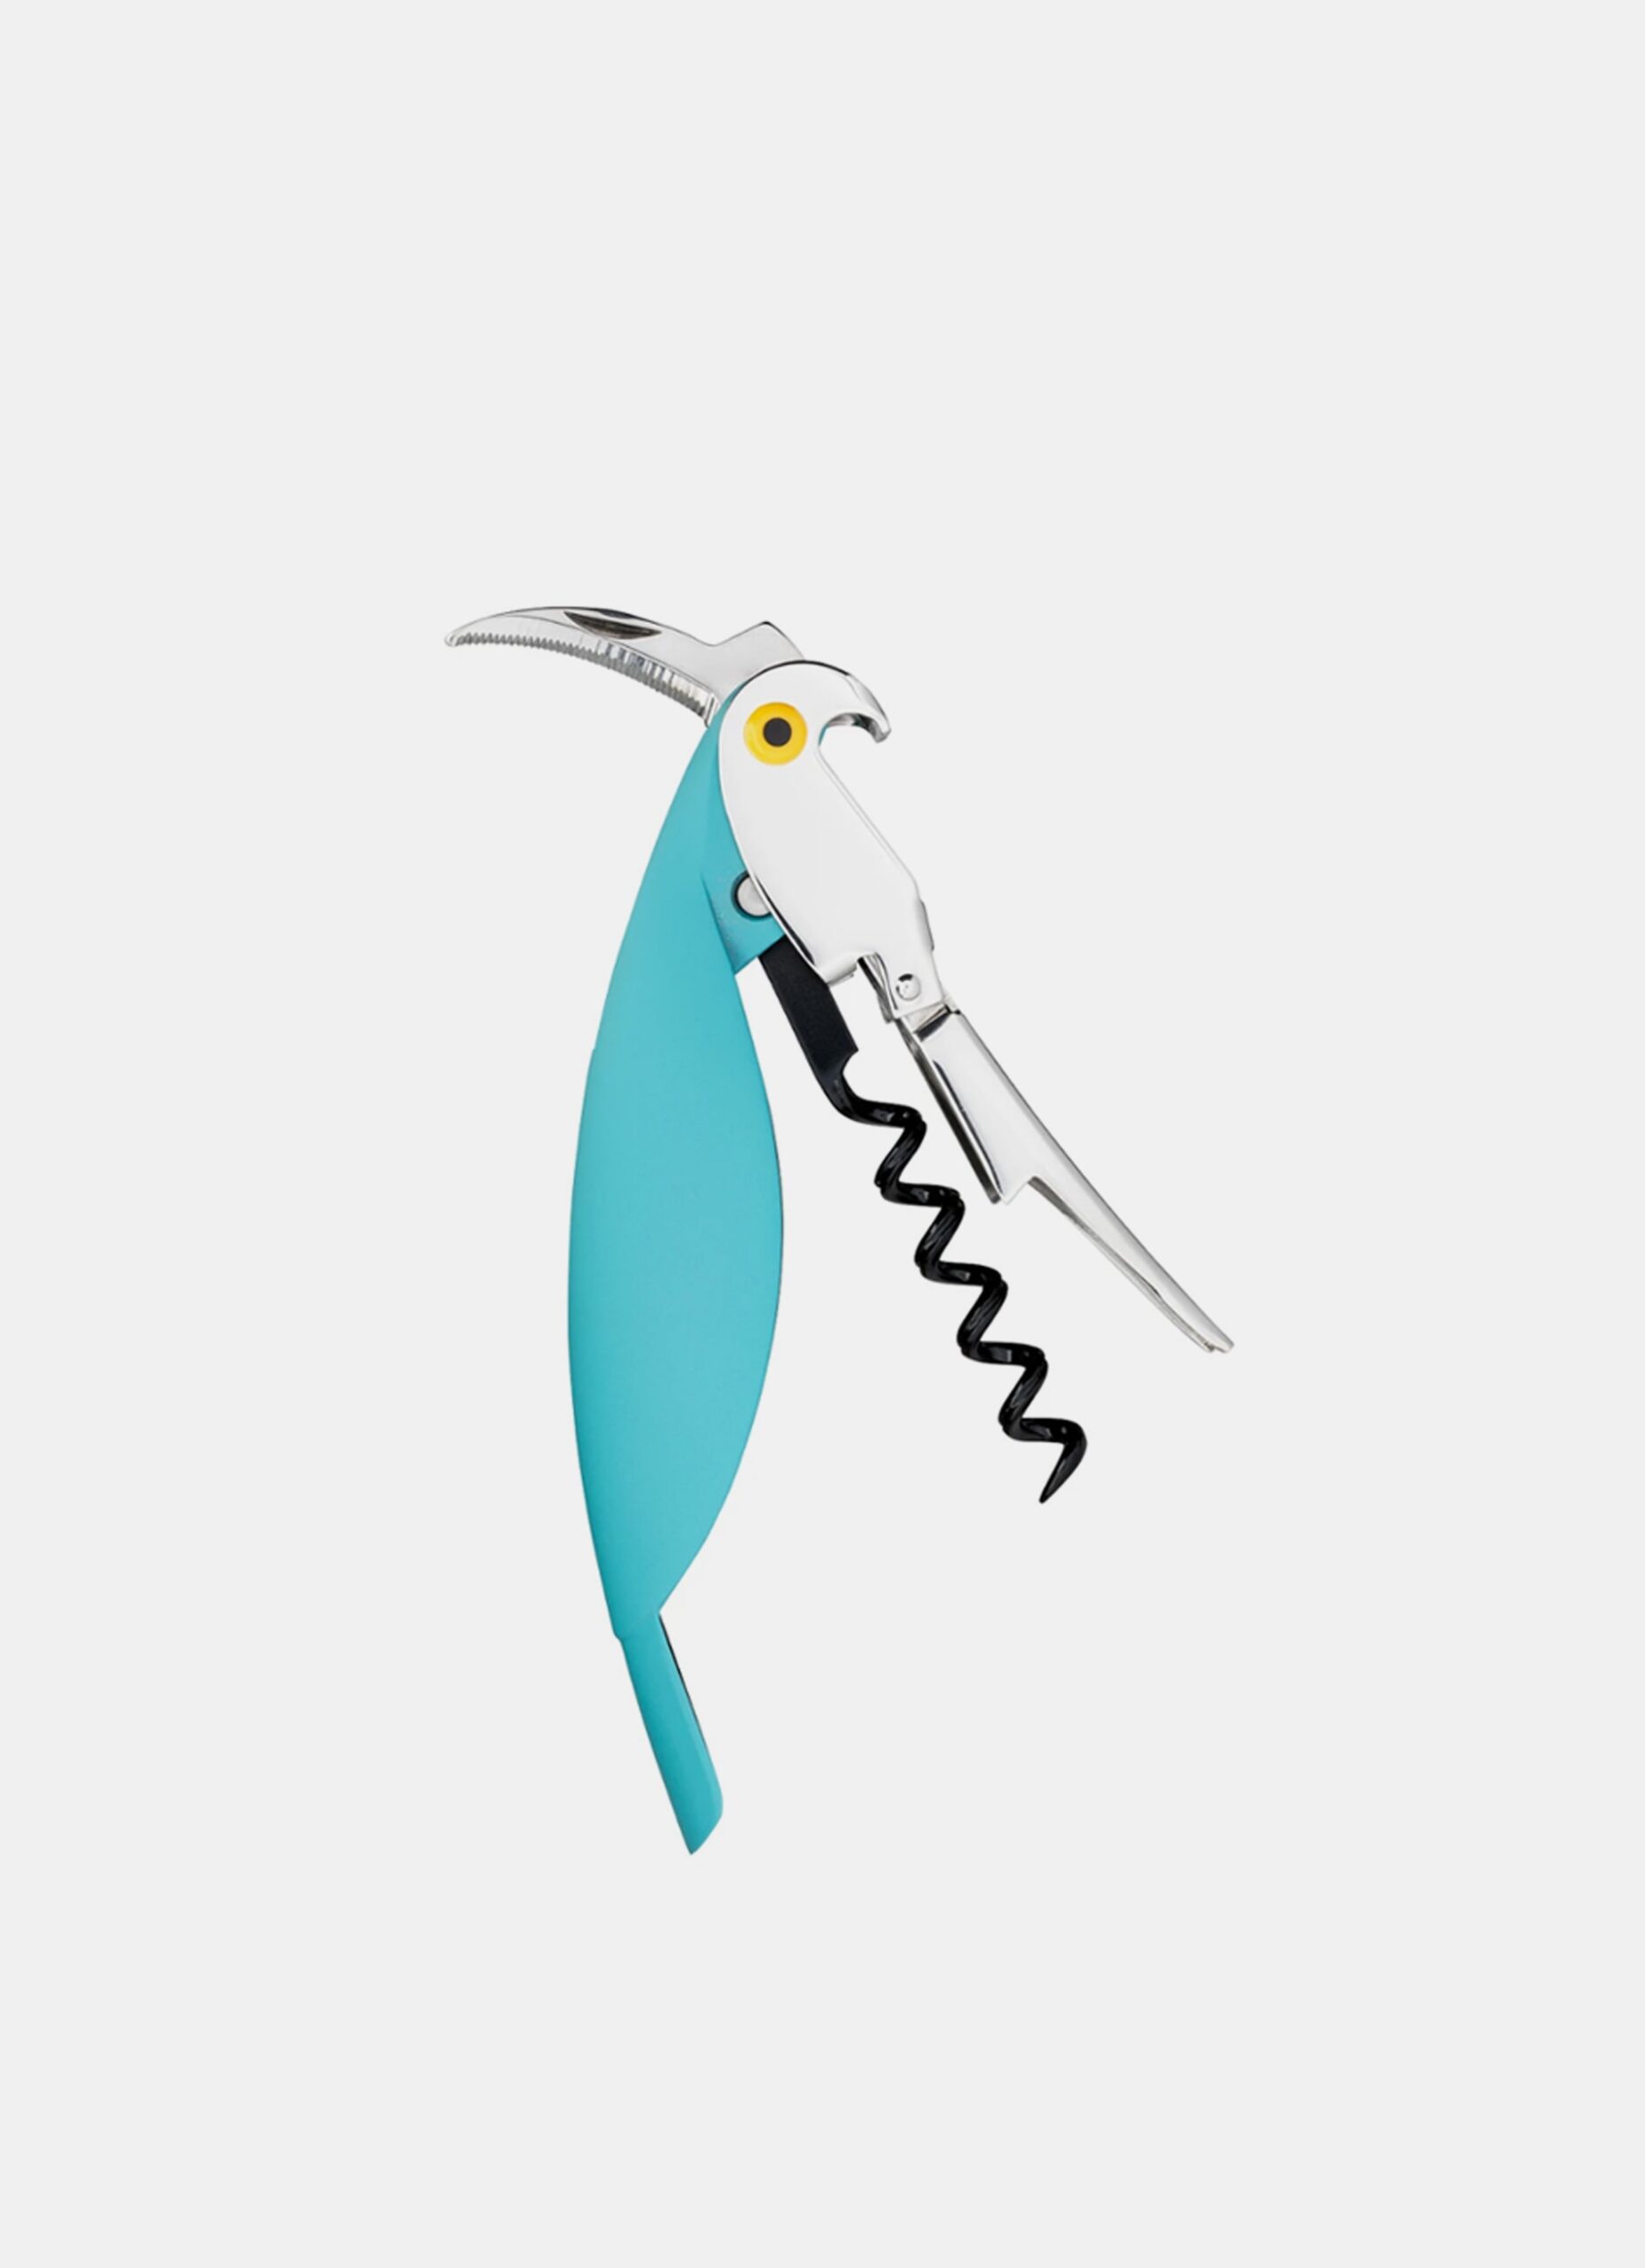 Alessi - Sommelier Corkscrew - Parrot - Light blue